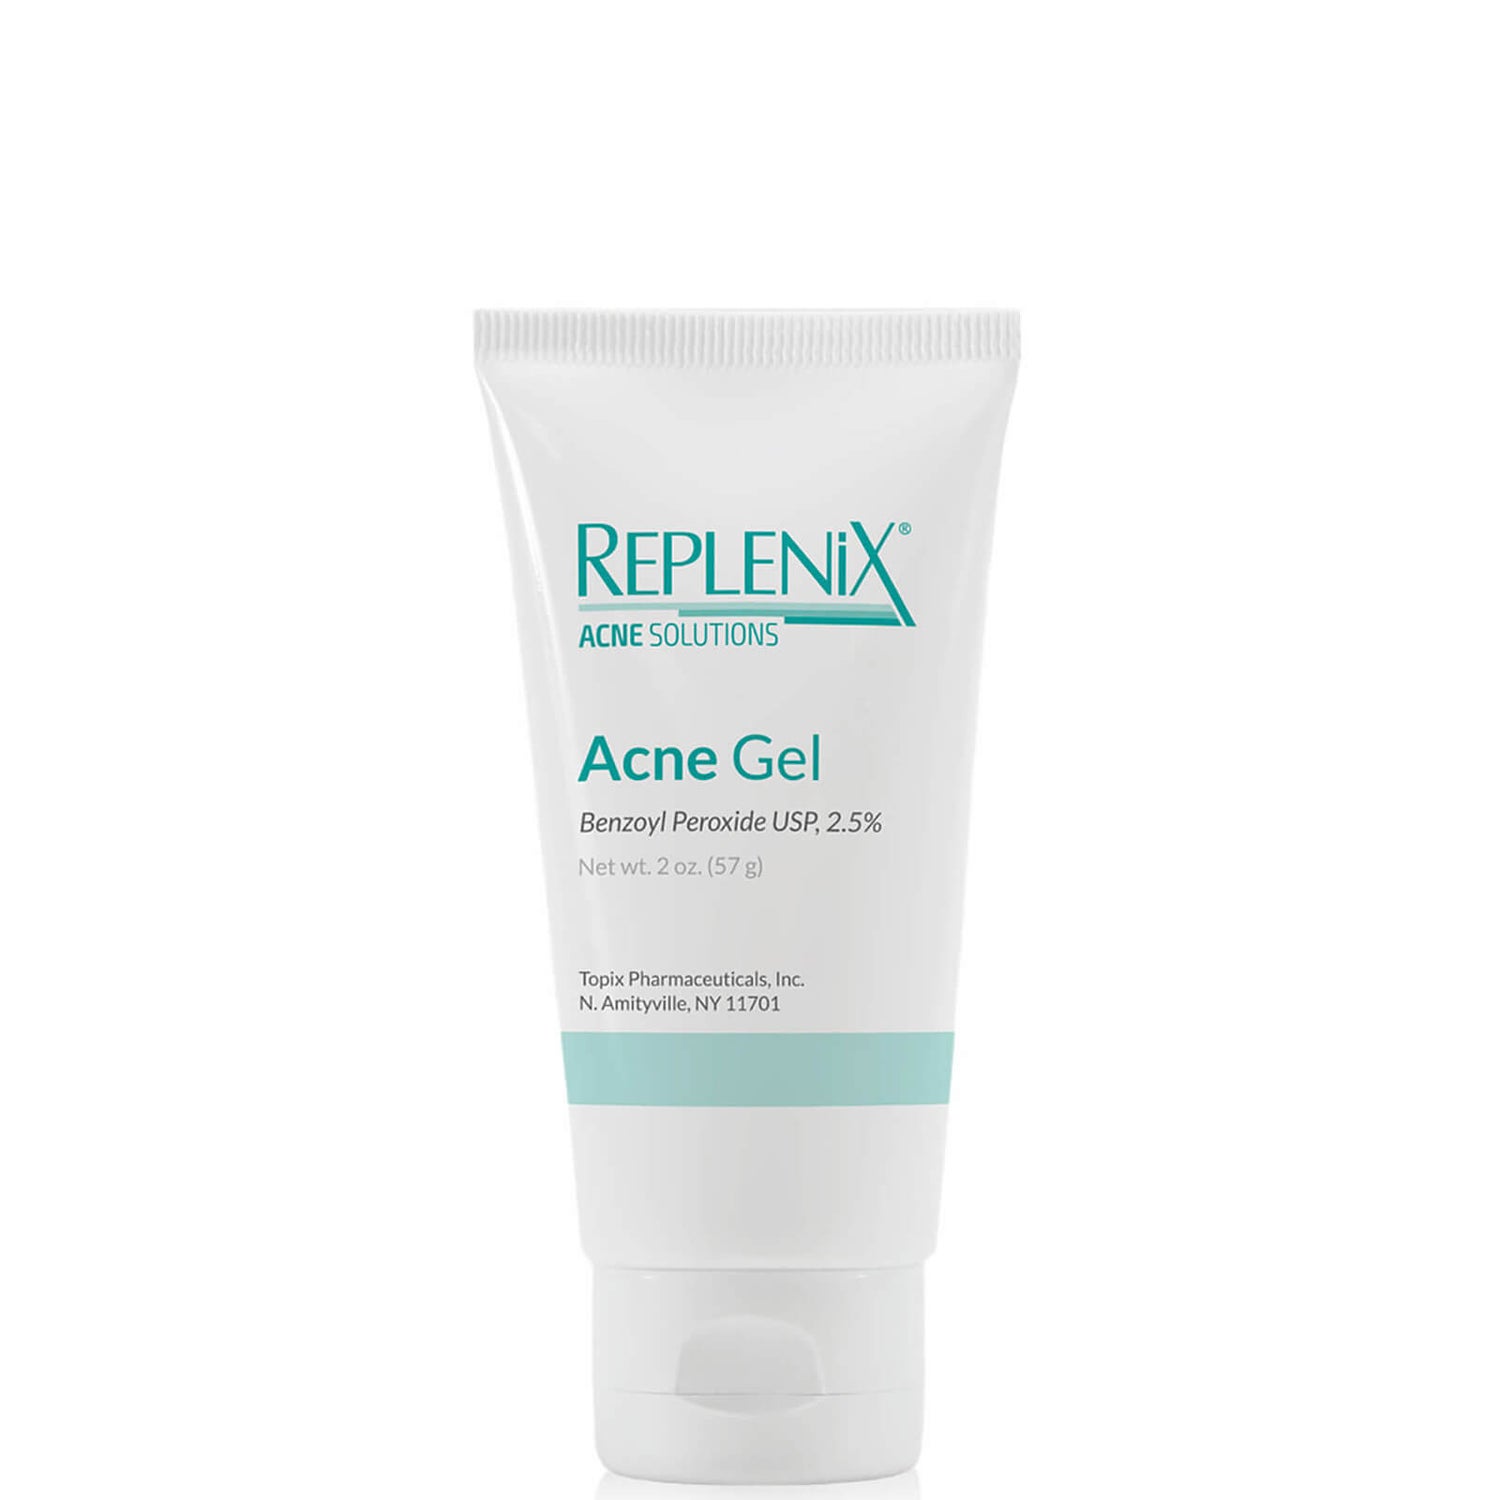 Replenix Acne Solutions Benzoyl Peroxide 2.5% Acne Gel